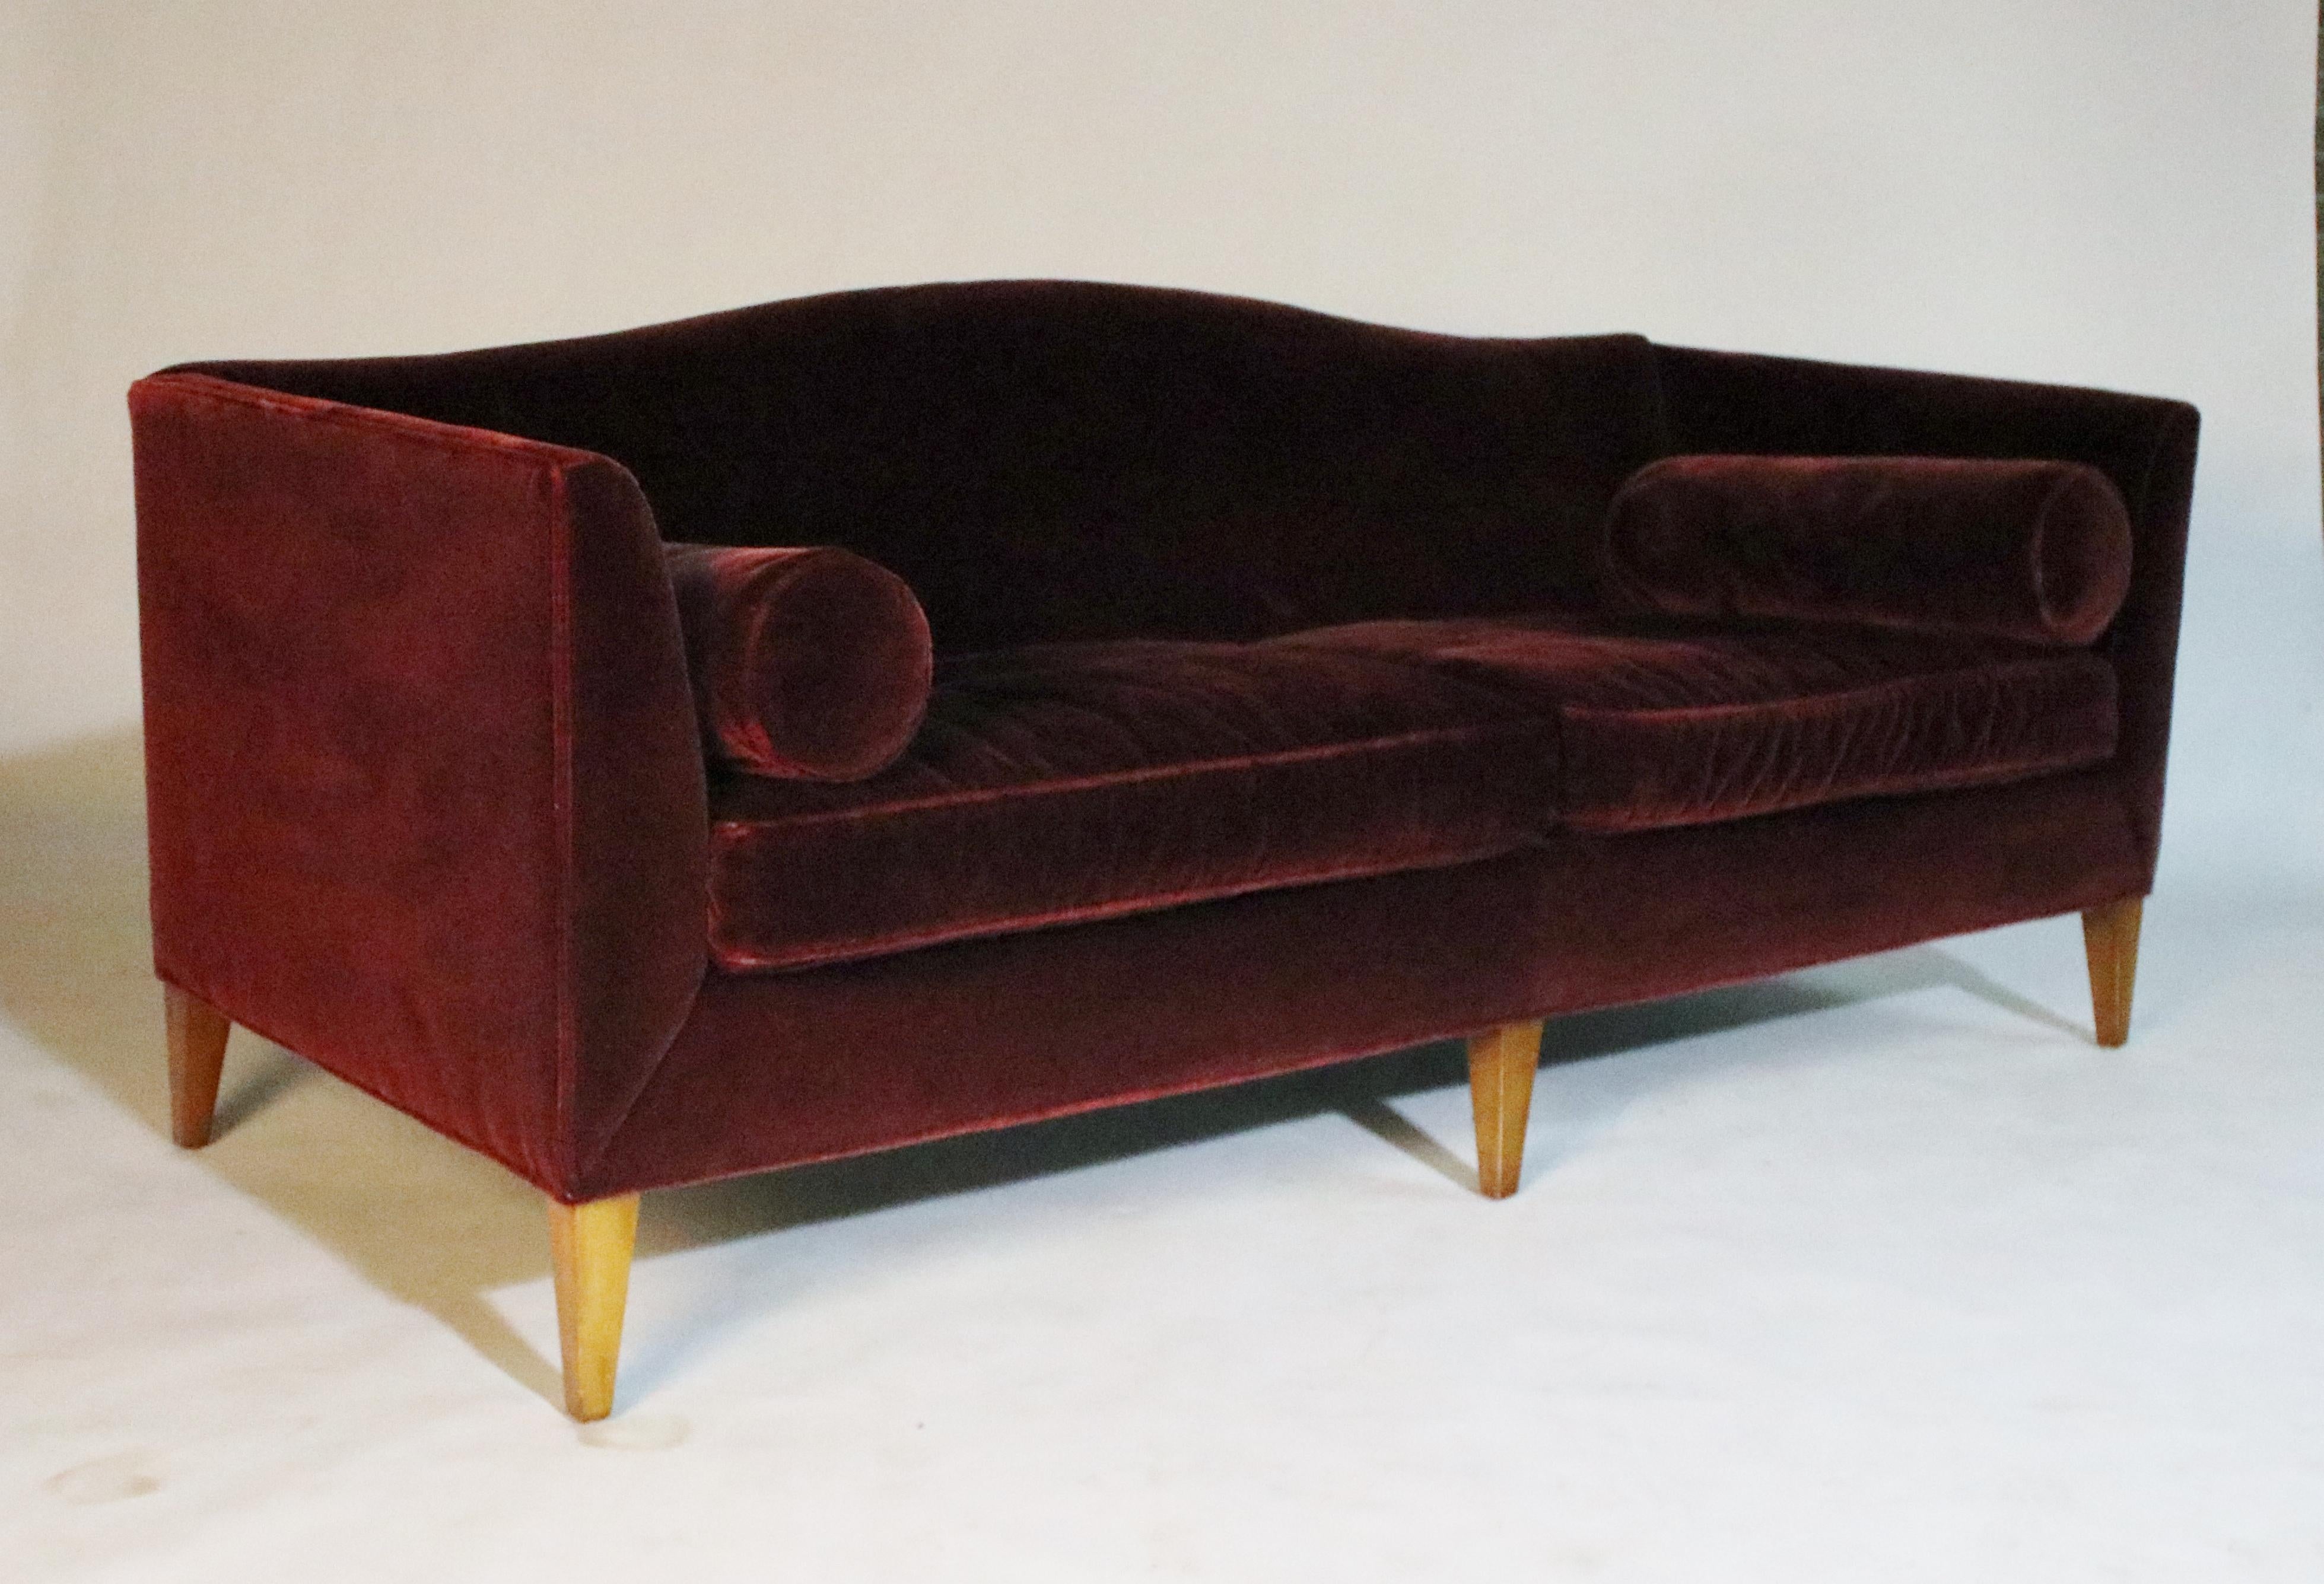 North American Baker Archetype Sofa Model #2386-80